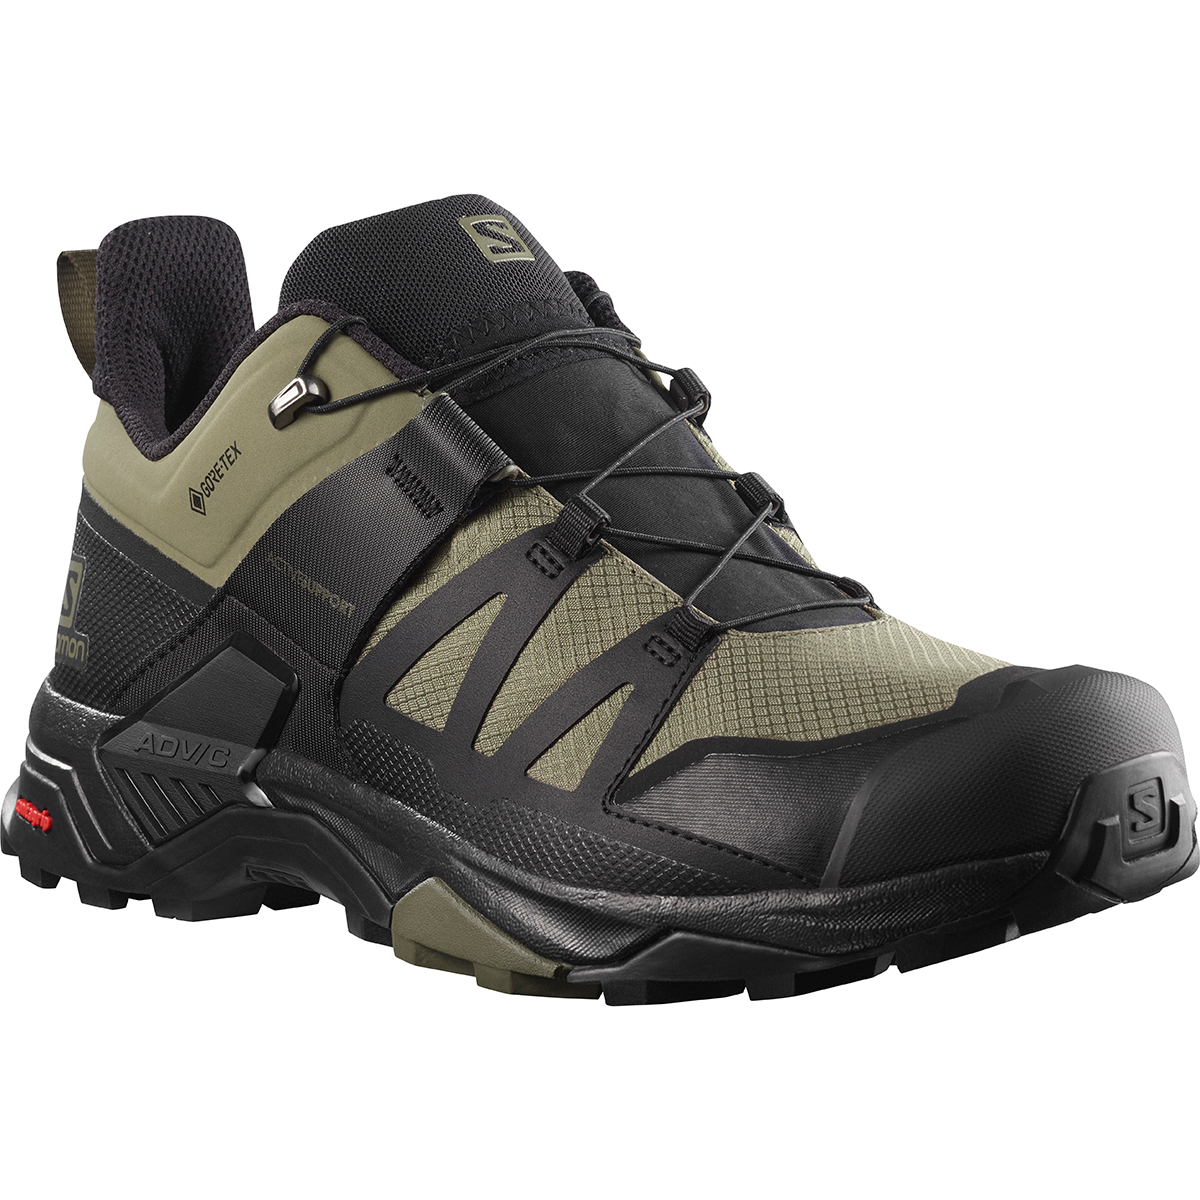 Salomon Men's X Ultra 4 Gtx Hiking Shoes - Size 11.5